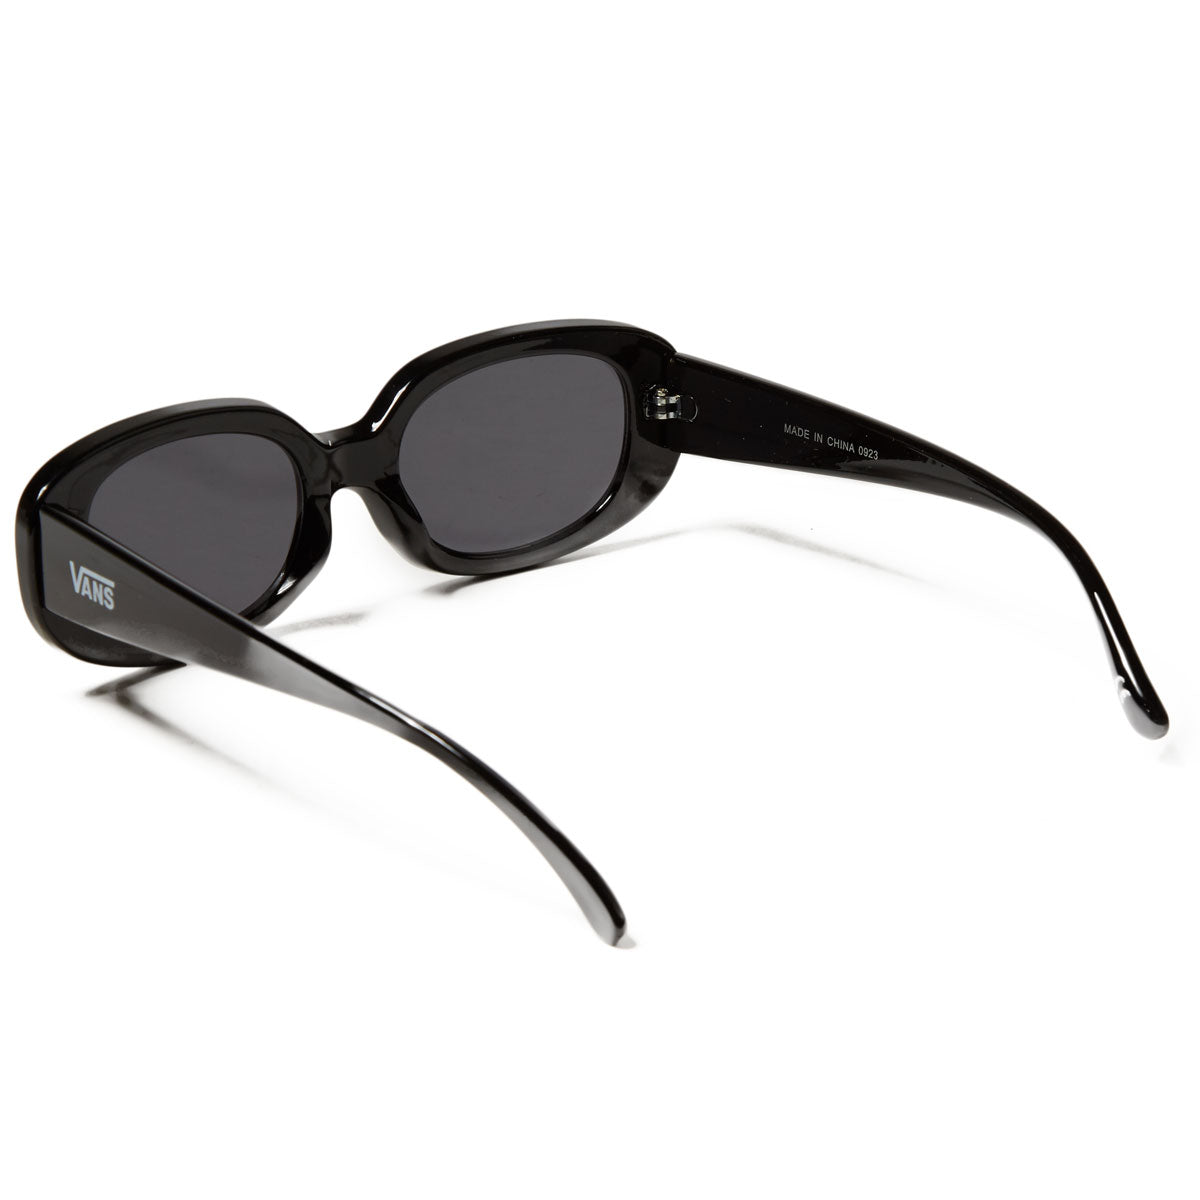 Vans Showstopper Sunglasses - Black image 2